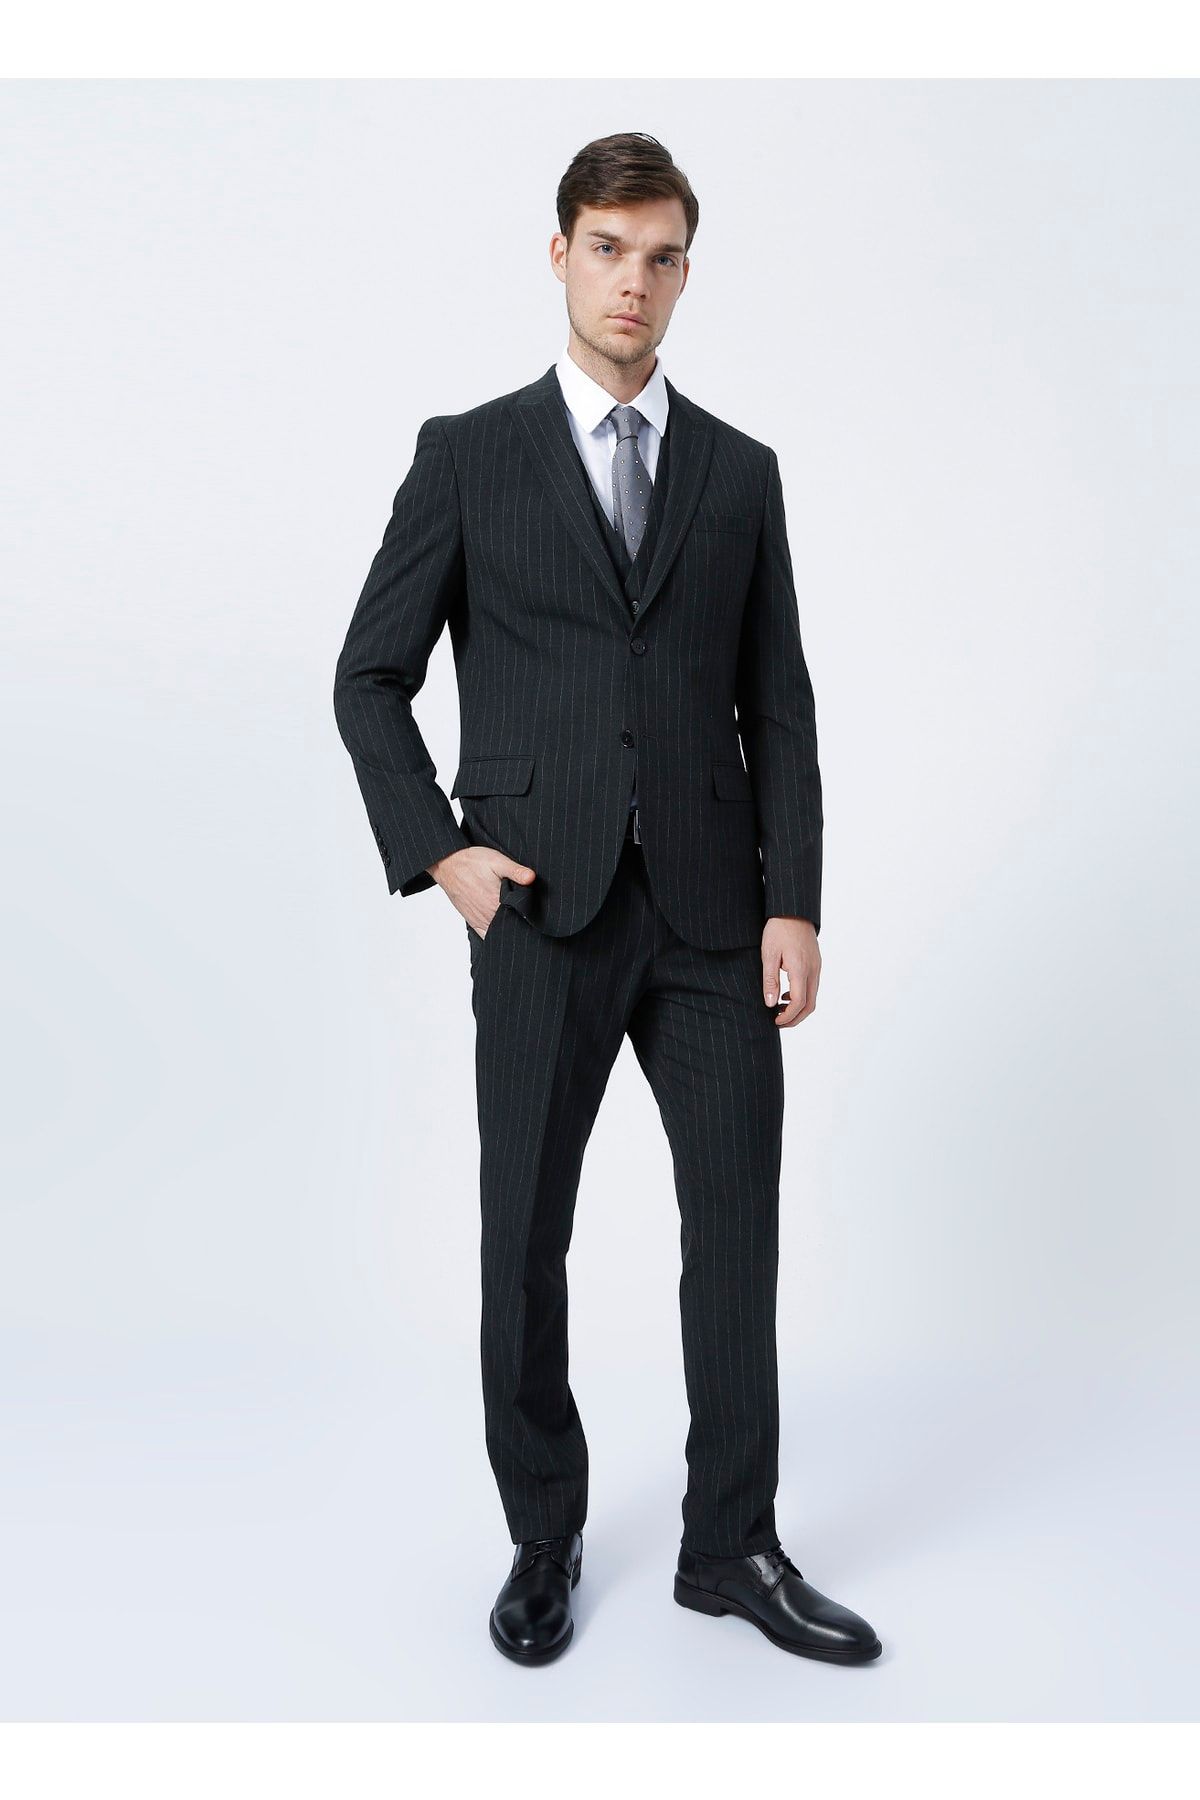 Fabrika Jamıs Ceket Yaka Slim Fit Çizgili Antrasit Erkek Takım Elbise